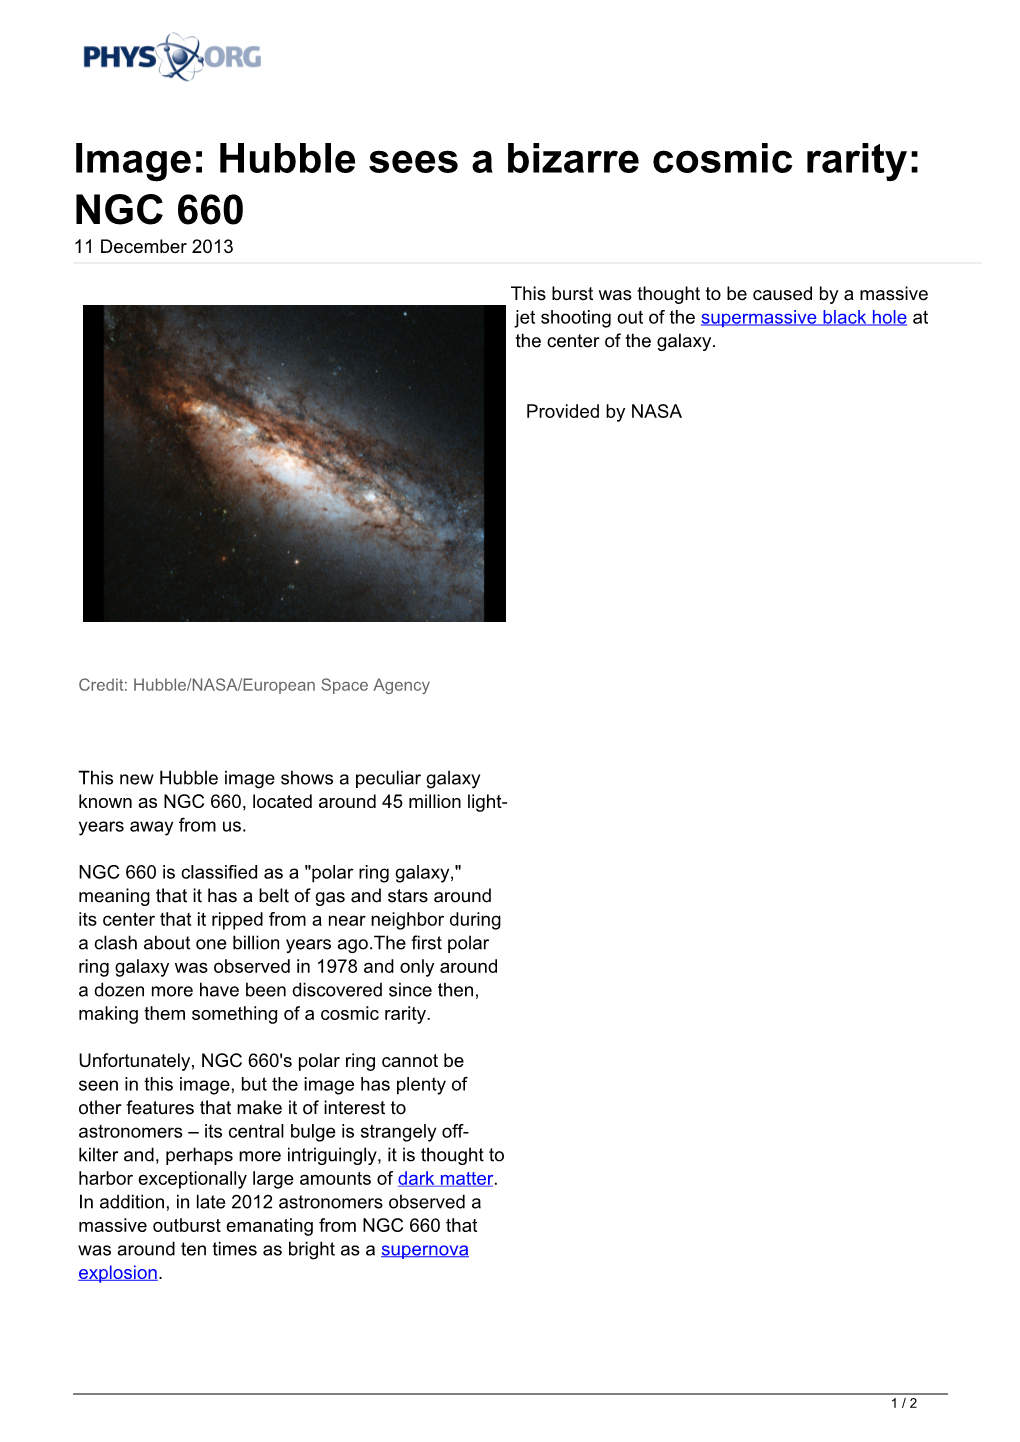 Hubble Sees a Bizarre Cosmic Rarity: NGC 660 11 December 2013